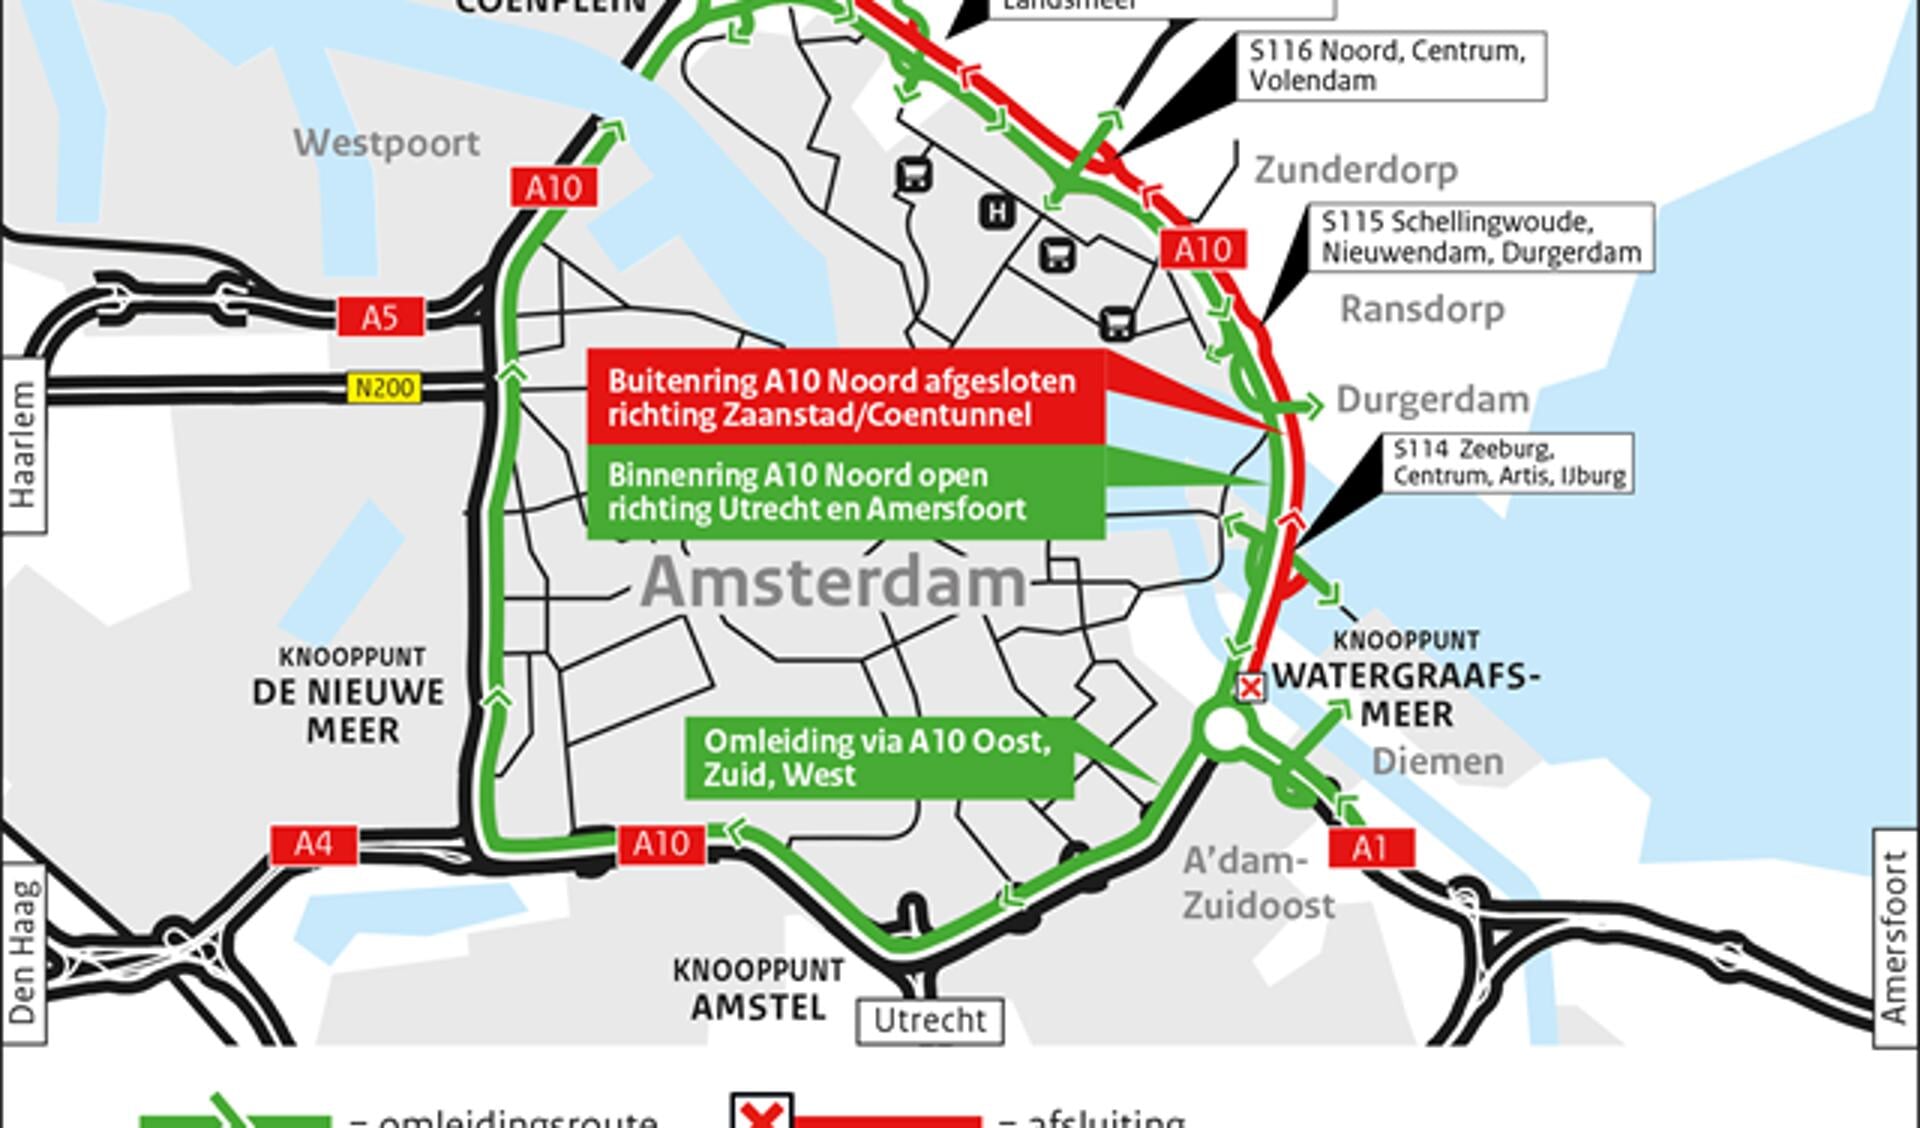 Omleidingskaartje afsluiting A10 Noord buitenring richting Zaanstad en Coentunnel tussen
knooppunt Watergraafsmeer en knooppunt Coenplein.